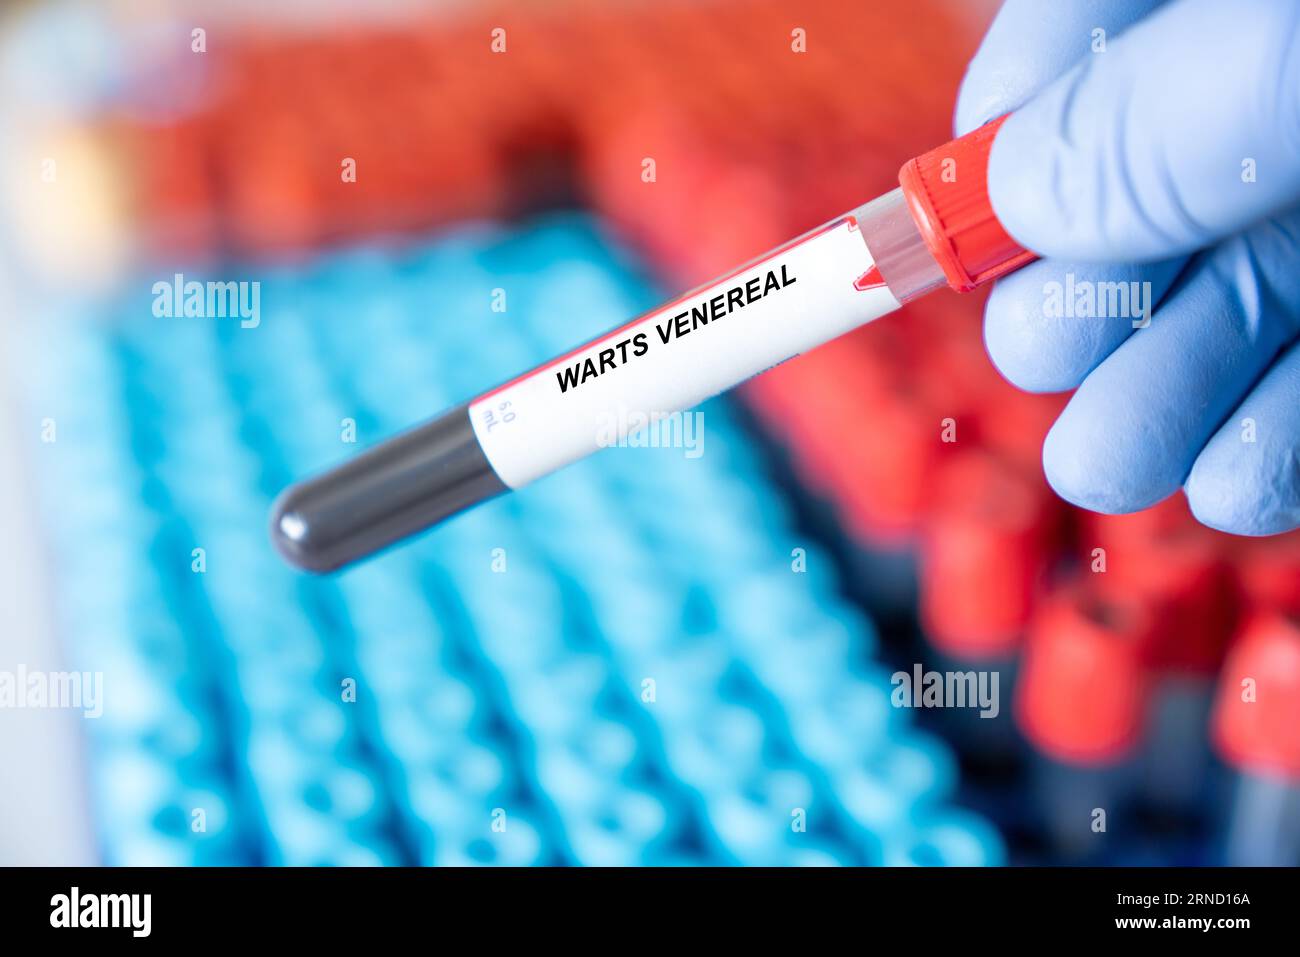 Warzen Venereal. Warzen Venereal Disease Blood Test in Medical Laboratory Stockfoto